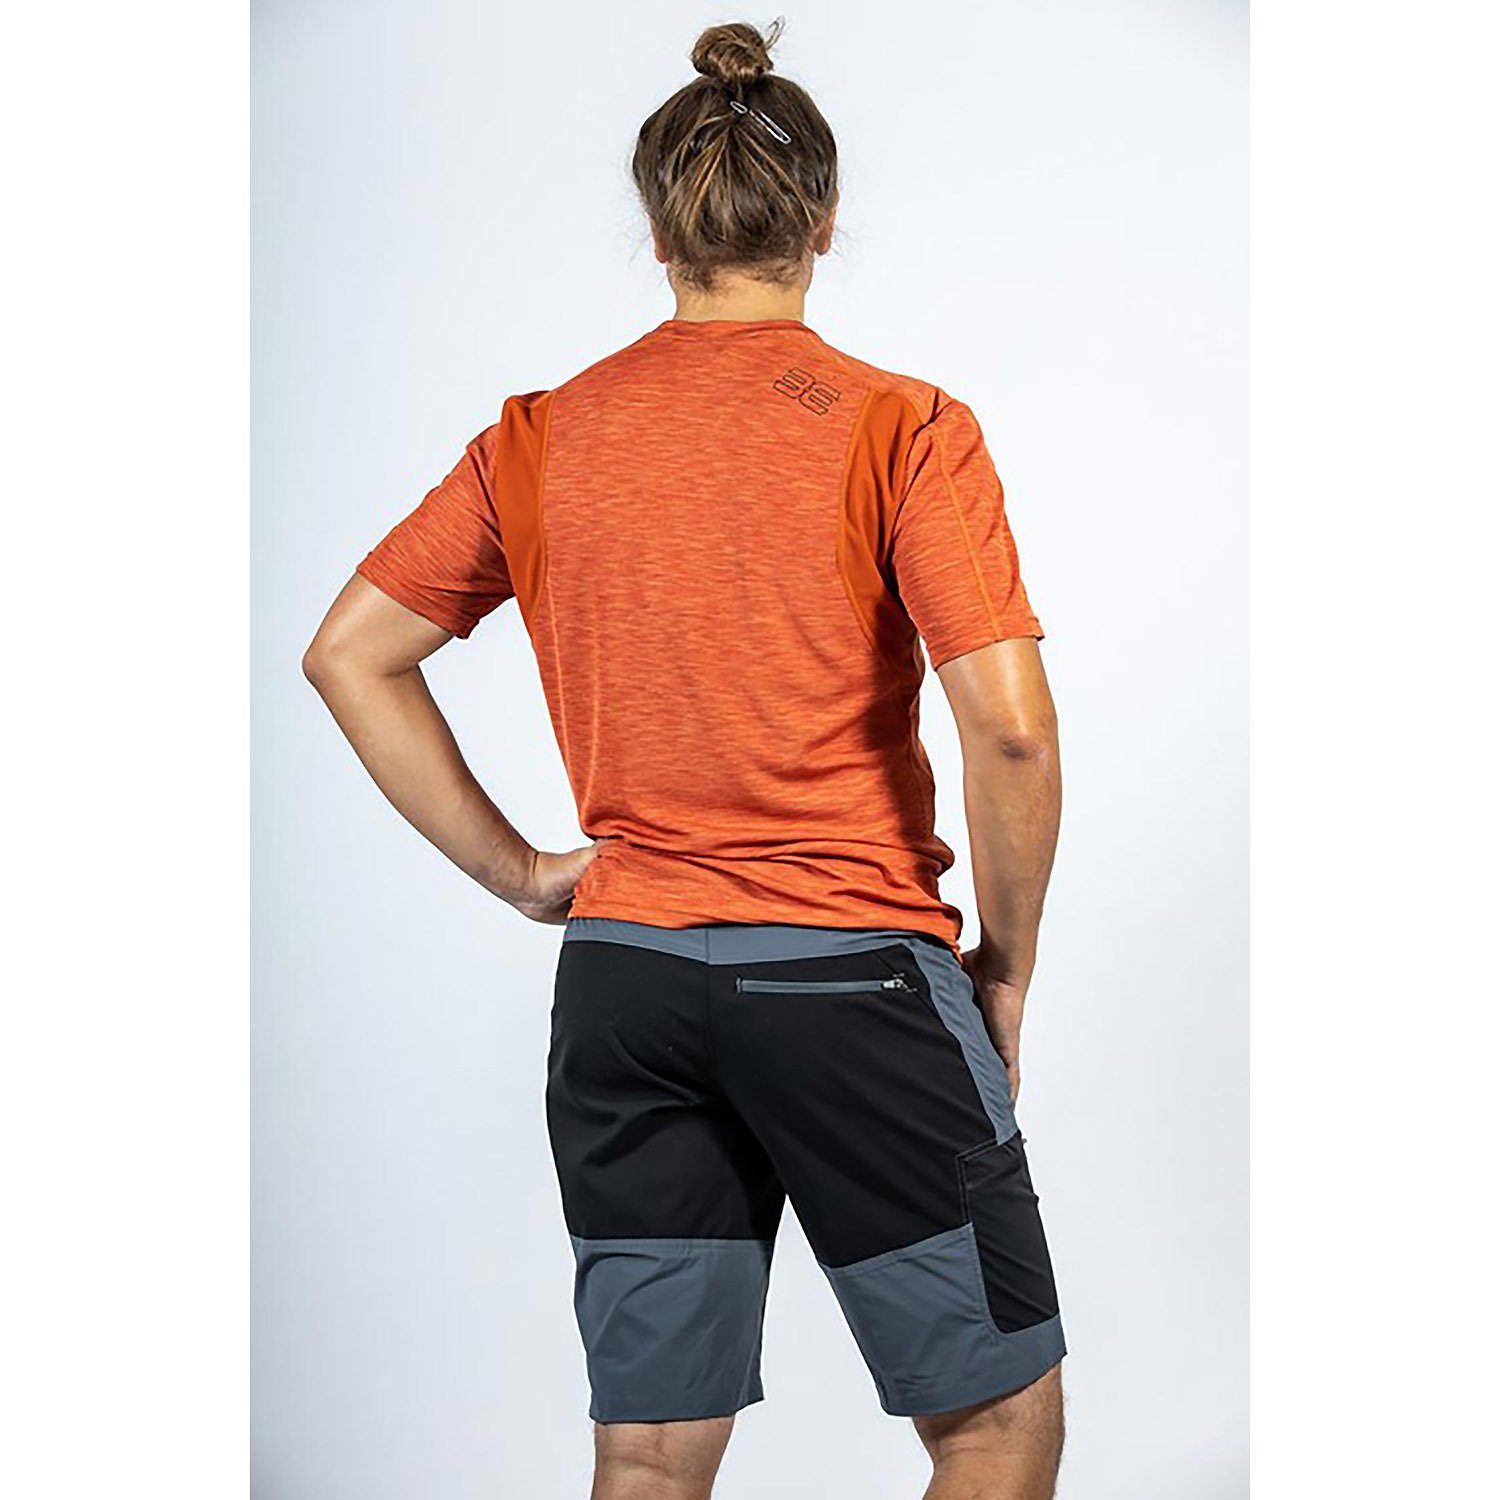 Maul Sport® Funktionsshorts Shorts Bermuda Dunkelgrau elastic Doldenhorn II